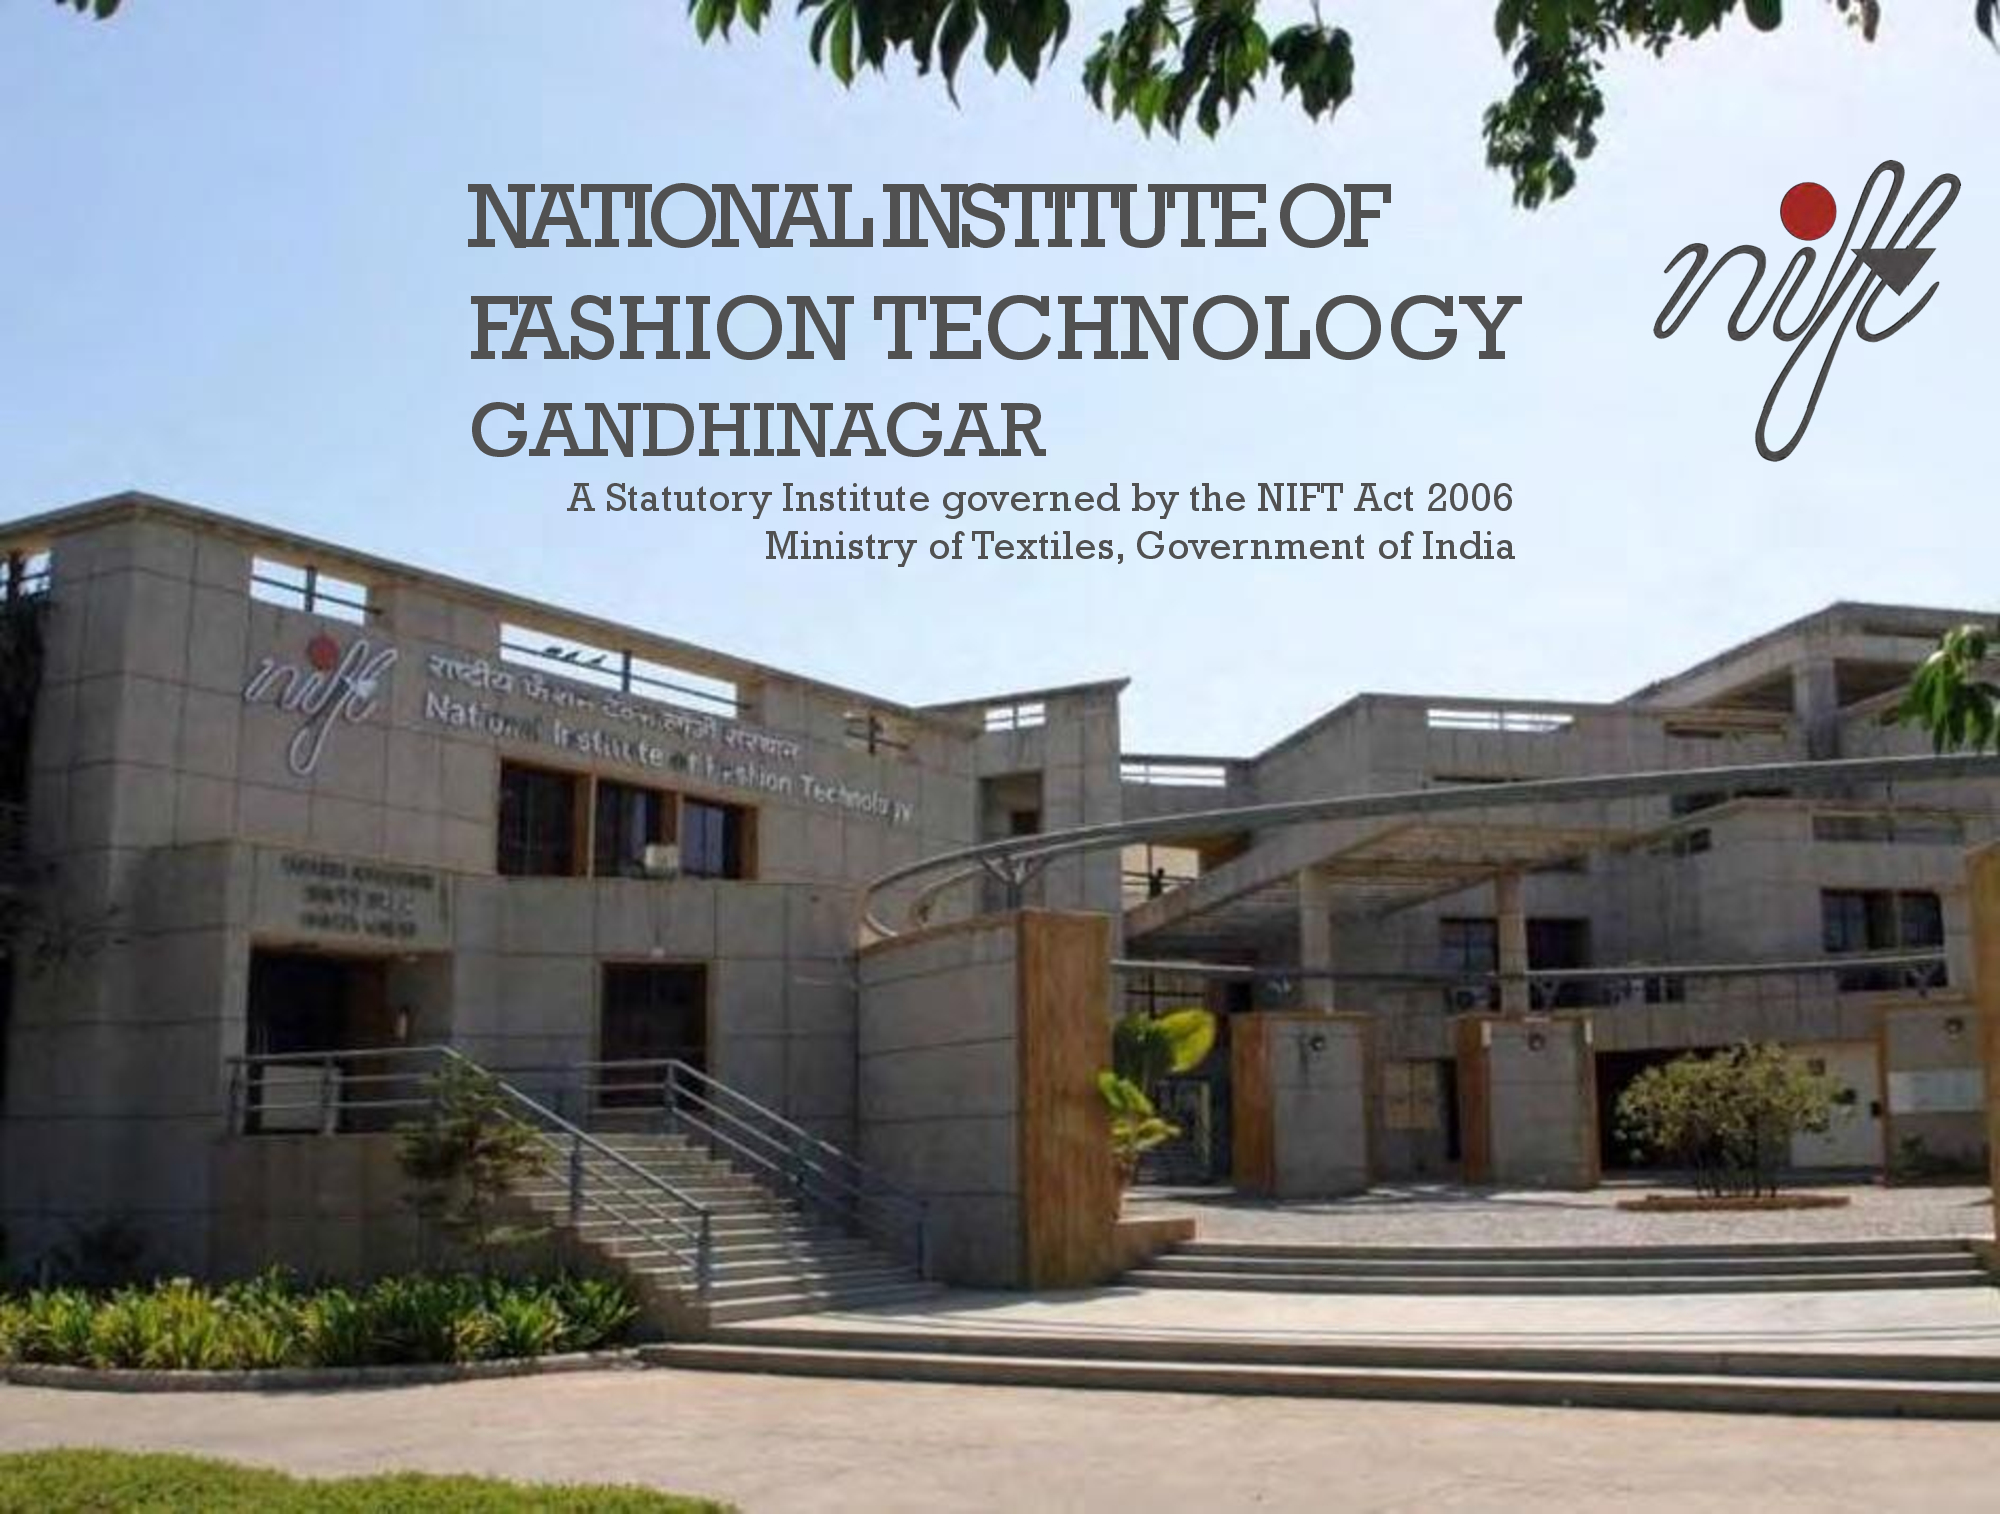 National Institute of Fashion Technology Gandhinagar